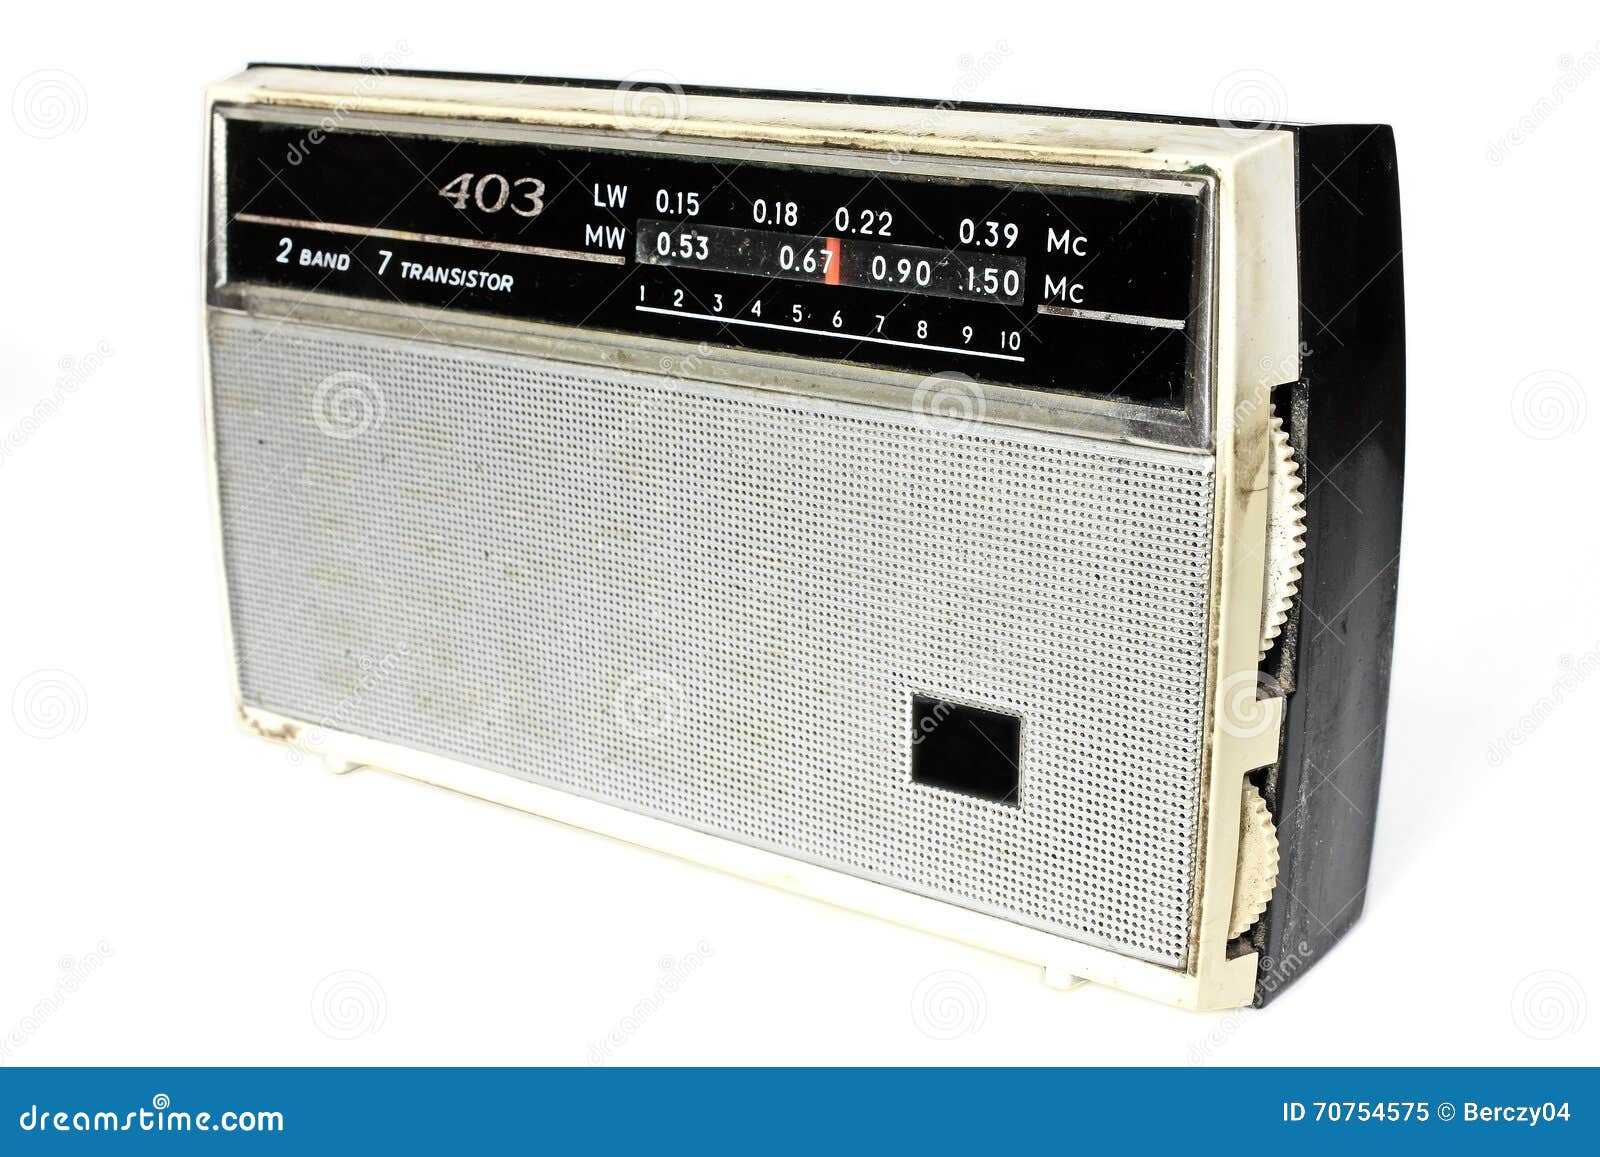 Used 0-39 Nice! Equipment Face Plate Vintage Antique Radio 1 